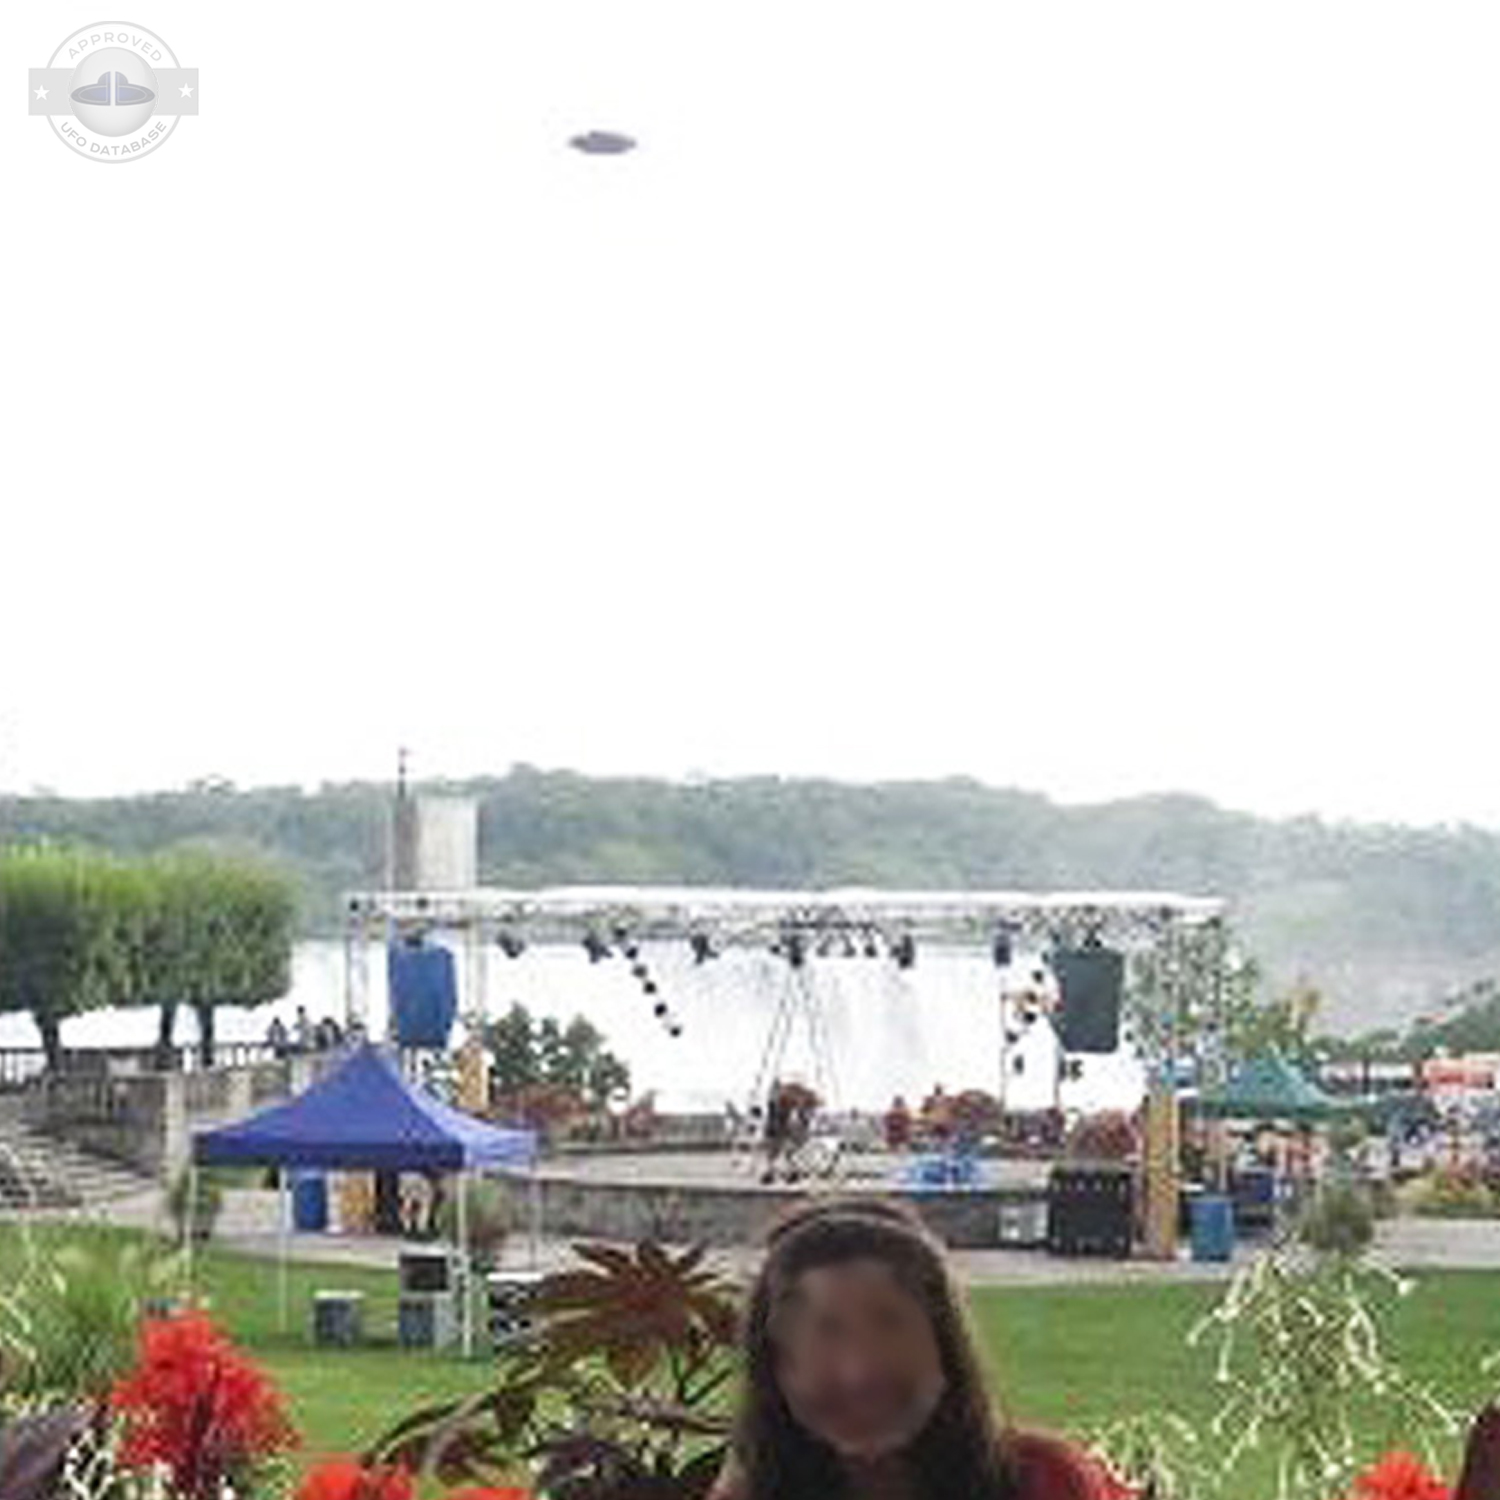 UFO Sighting over Niagara Falls in Ontario | Canada UFO picture 2010 UFO Picture #166-3